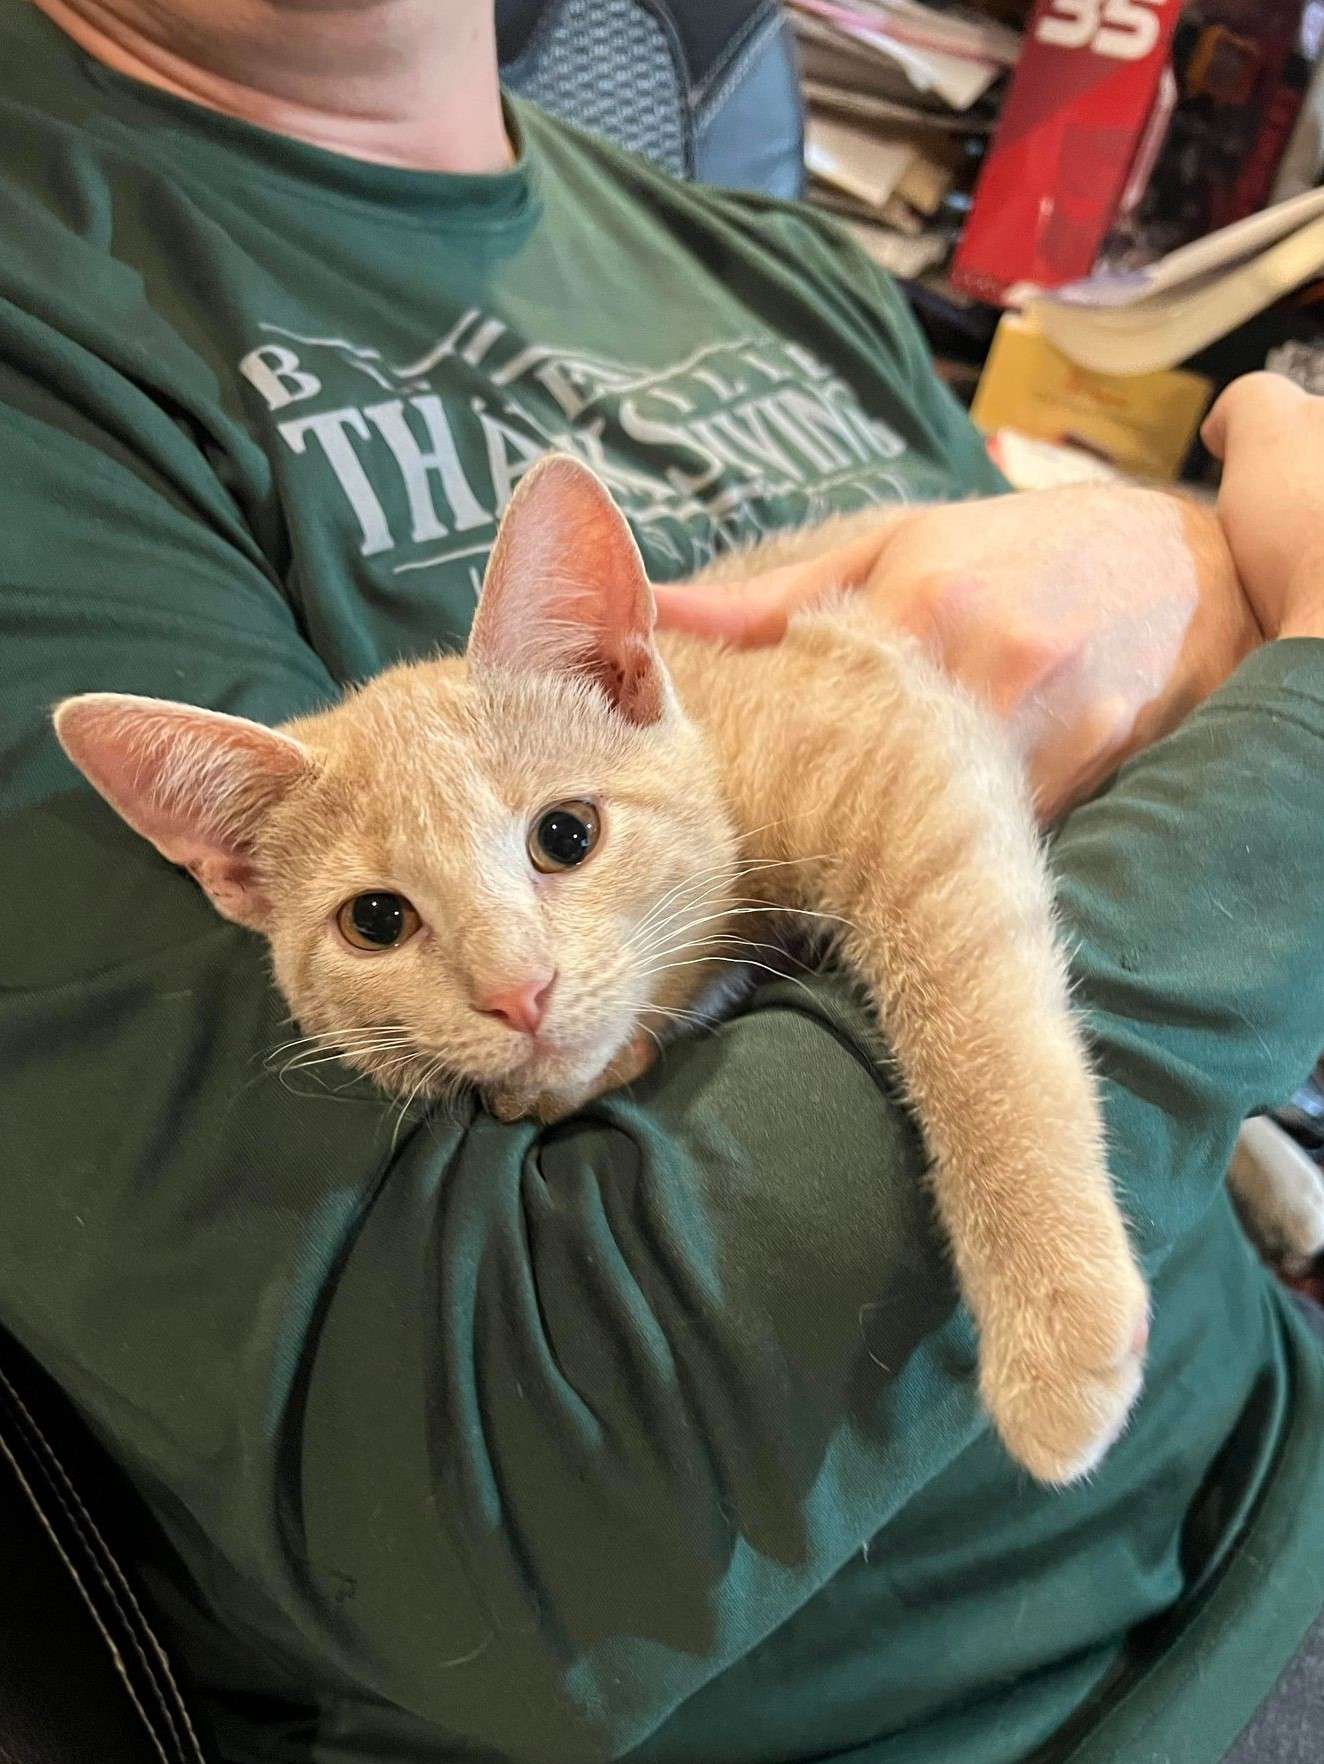 orange striped kitten held in arms of person wearing green shirt